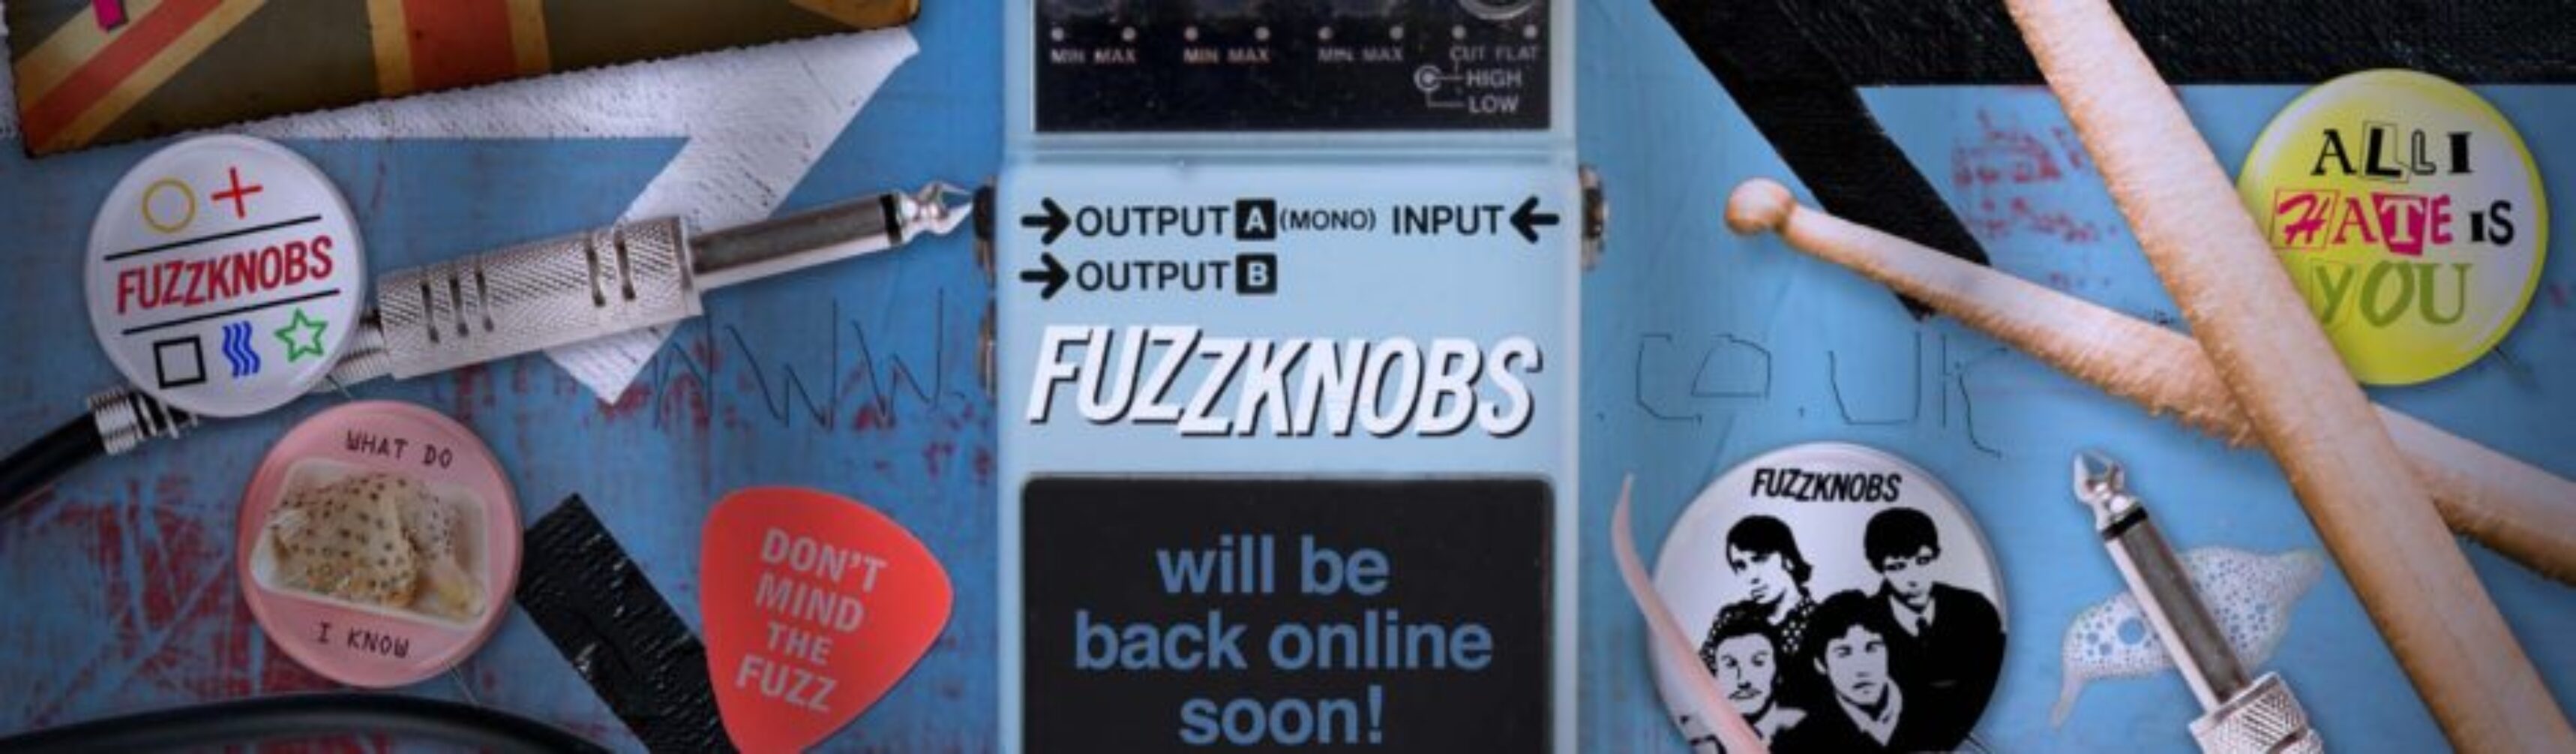 Fuzzknobs-homepage